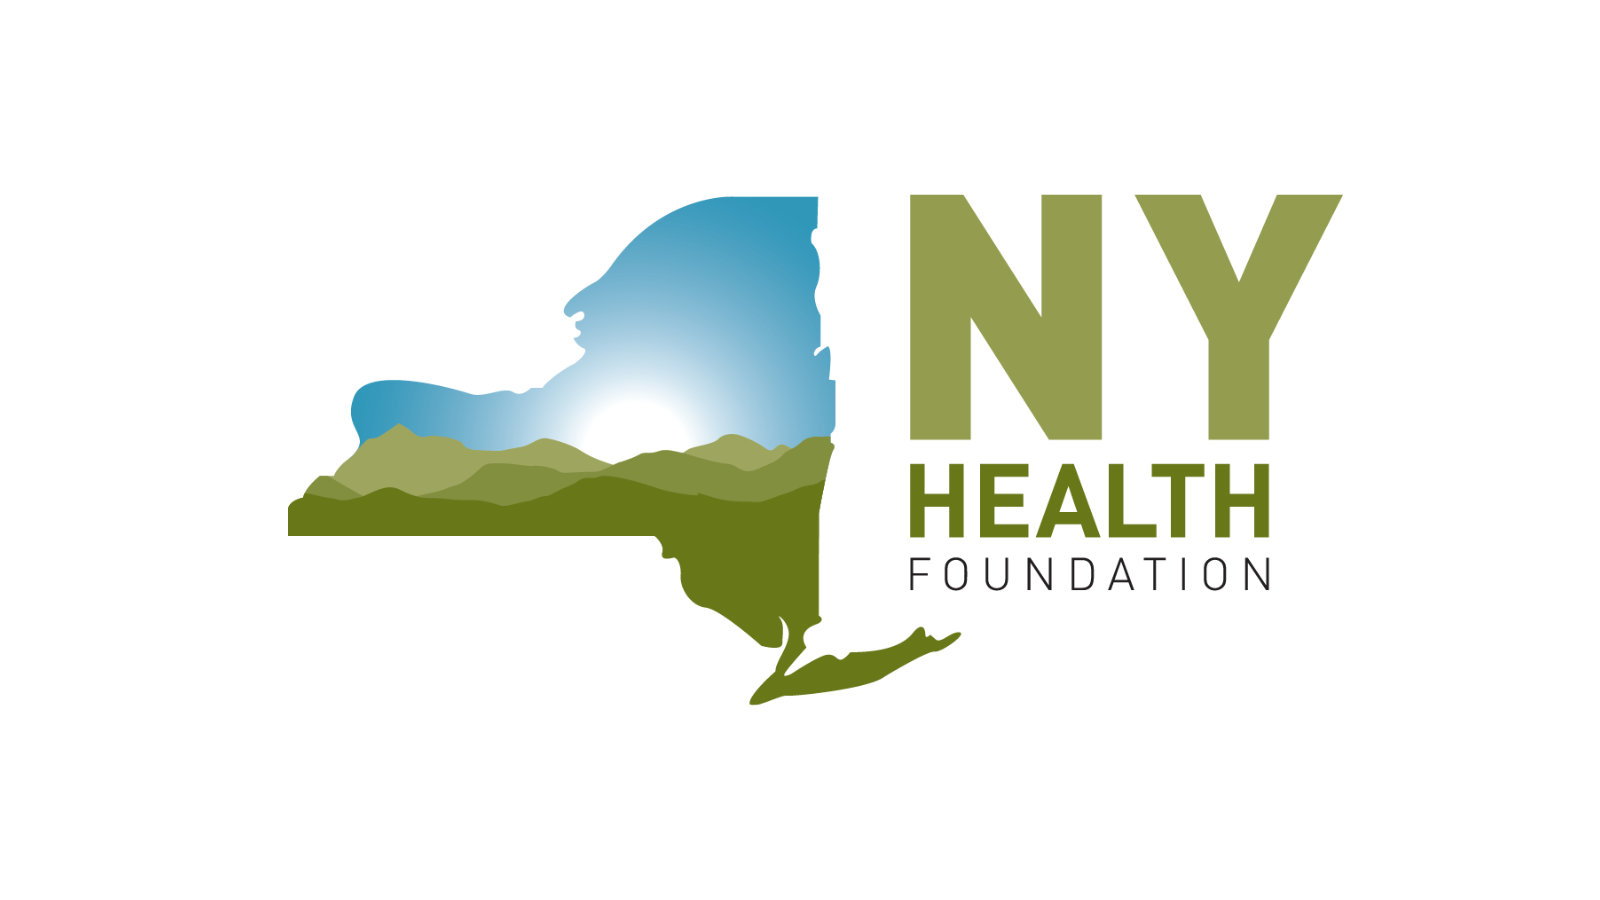 The New York Health Foundation